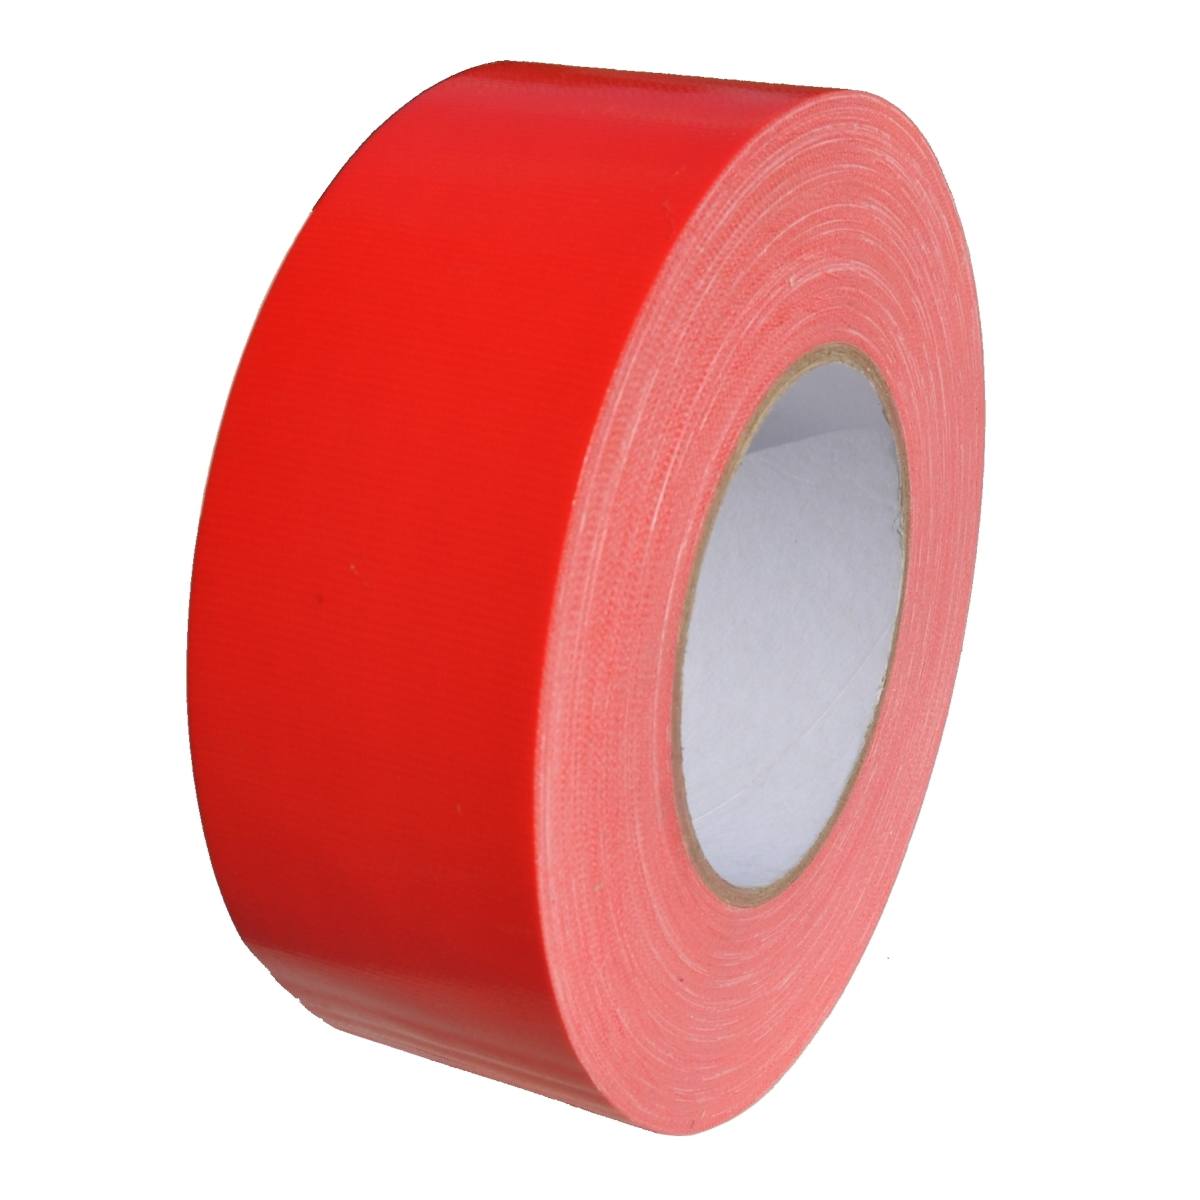 S-K-S 990 Fabric tape 75mmx50m red